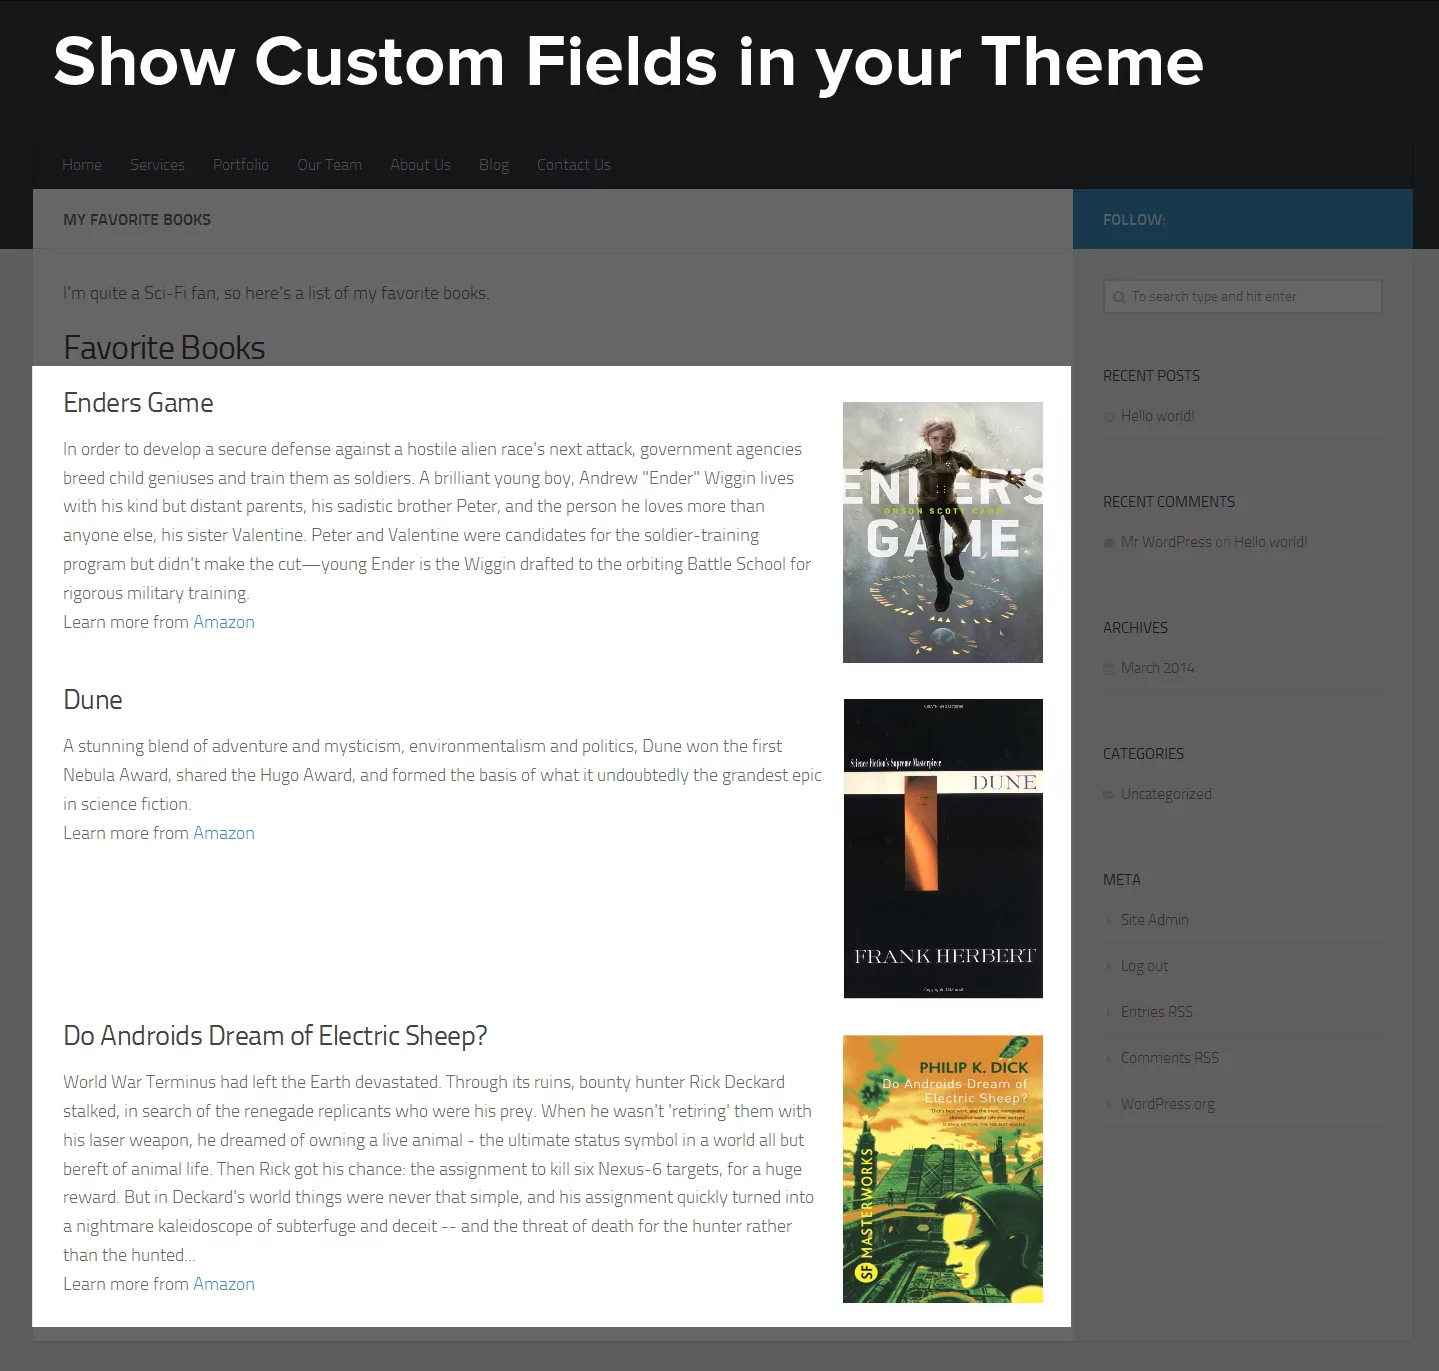 Show Custom Fields in your Theme